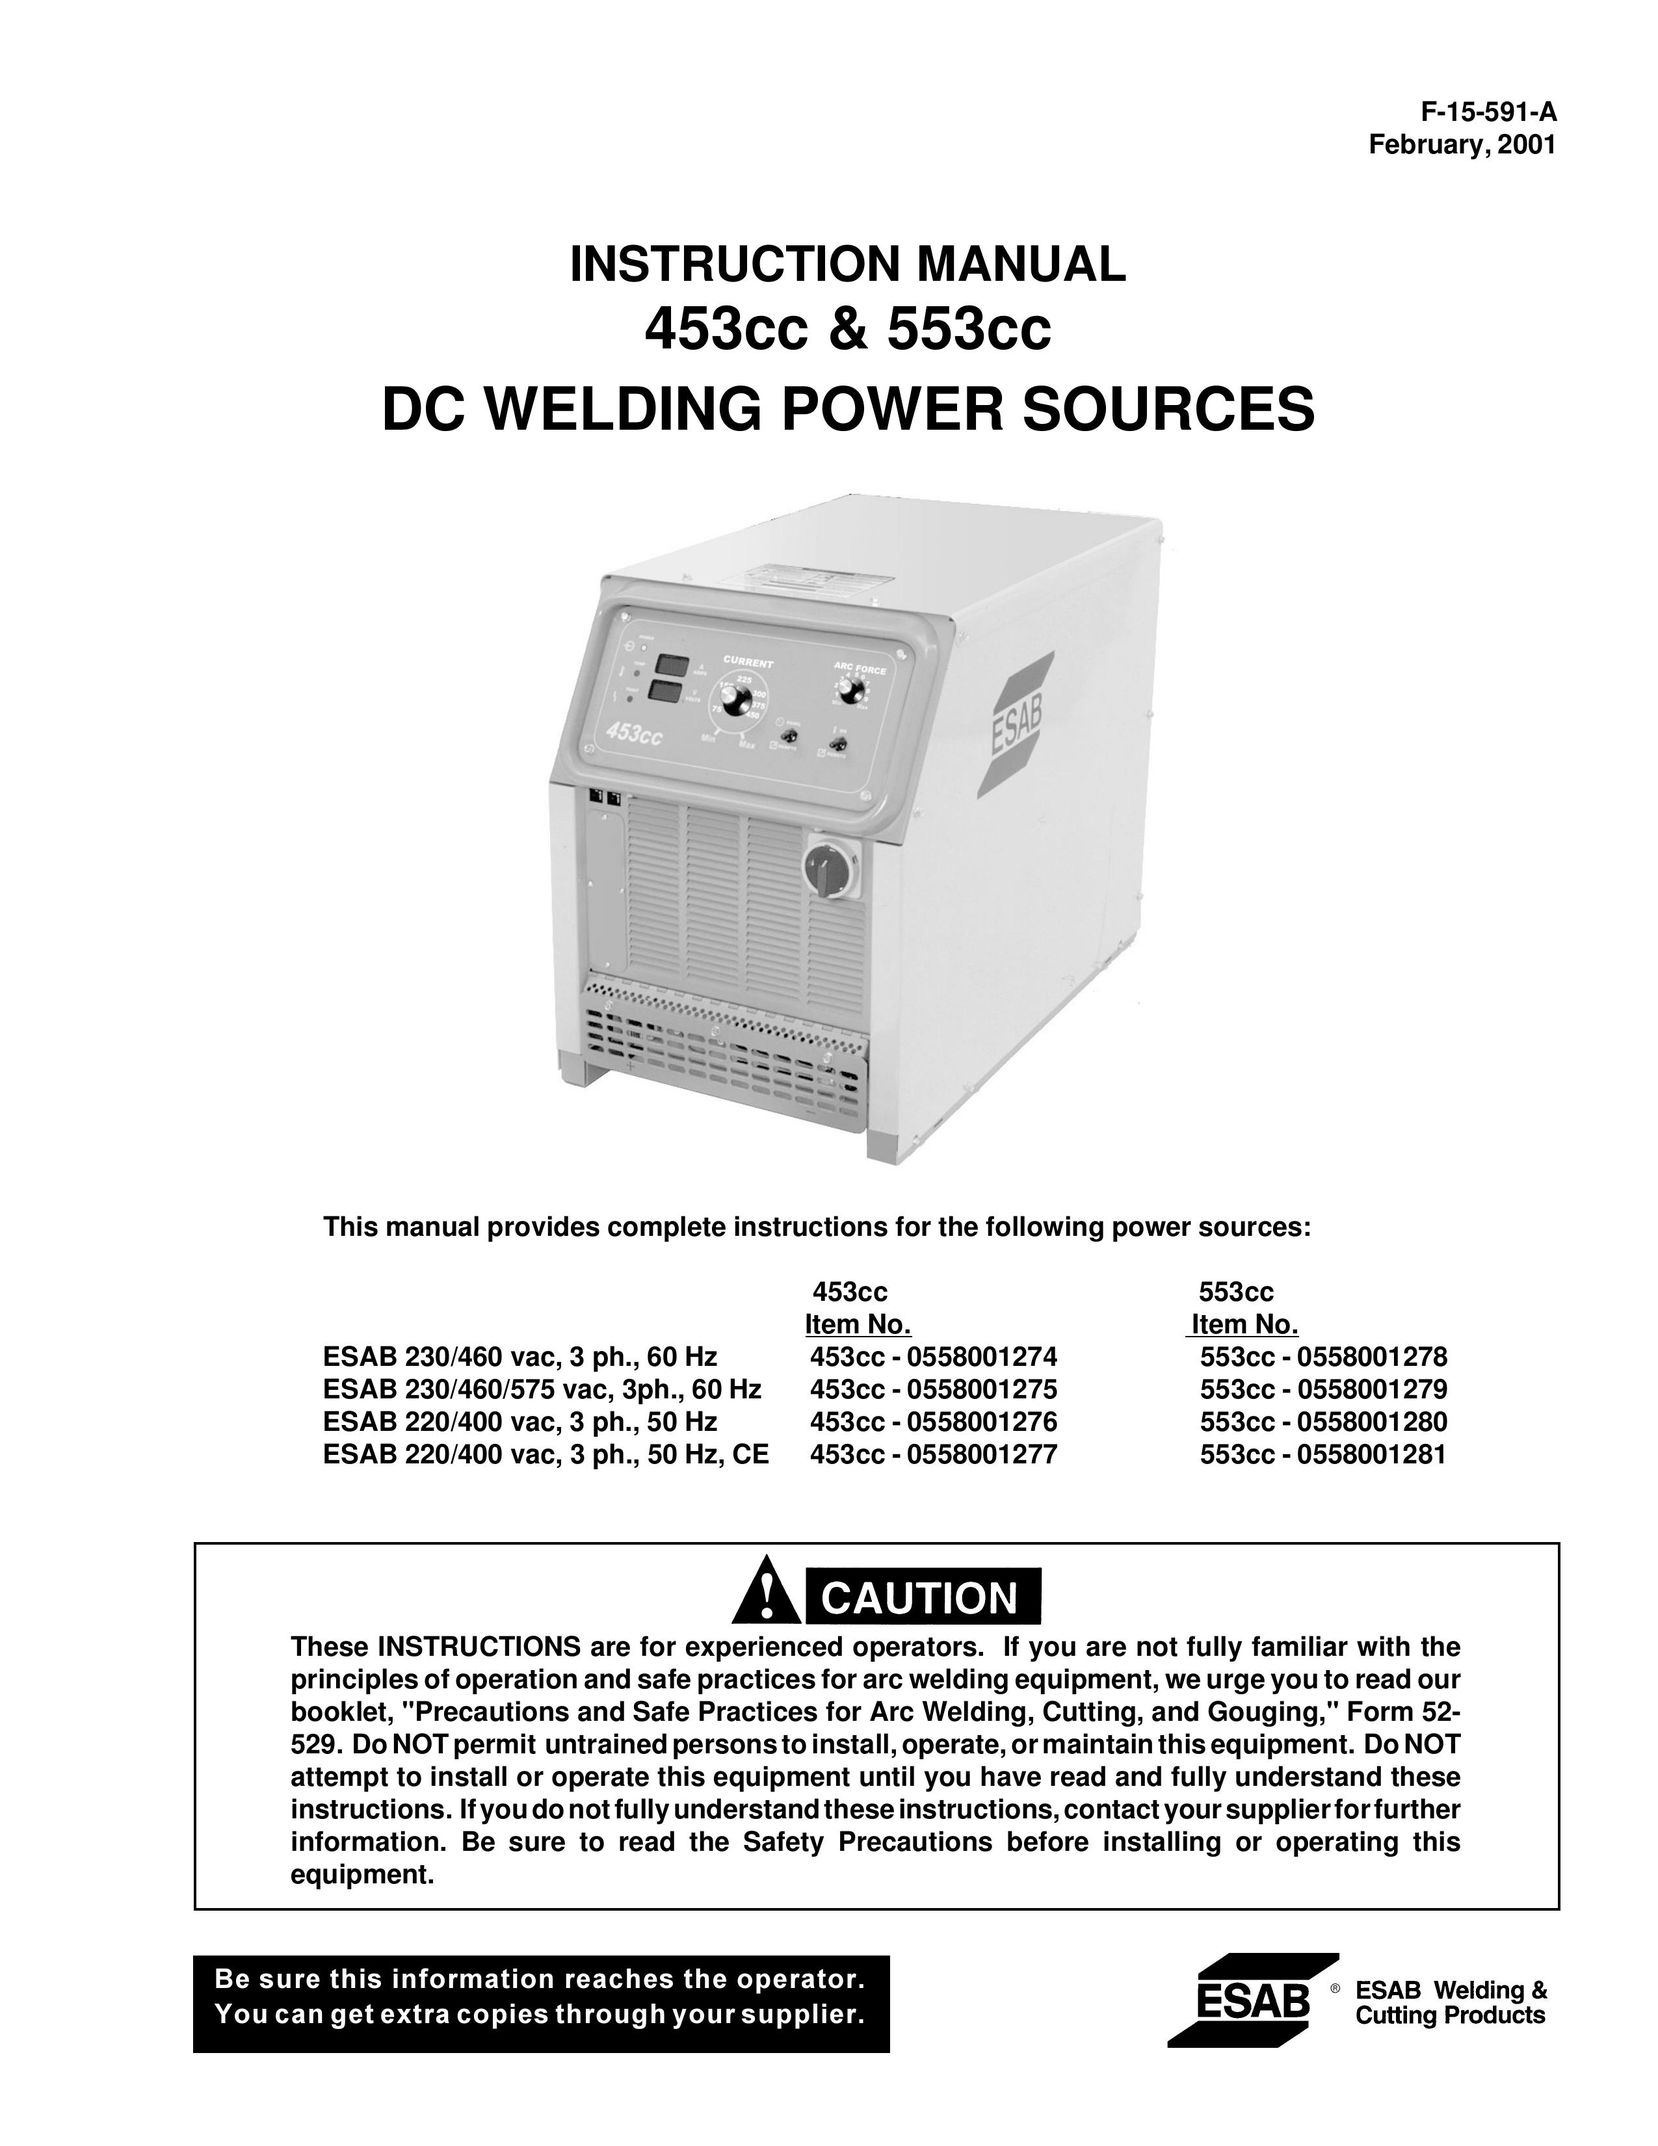 LG Electronics 553cc Welding System User Manual